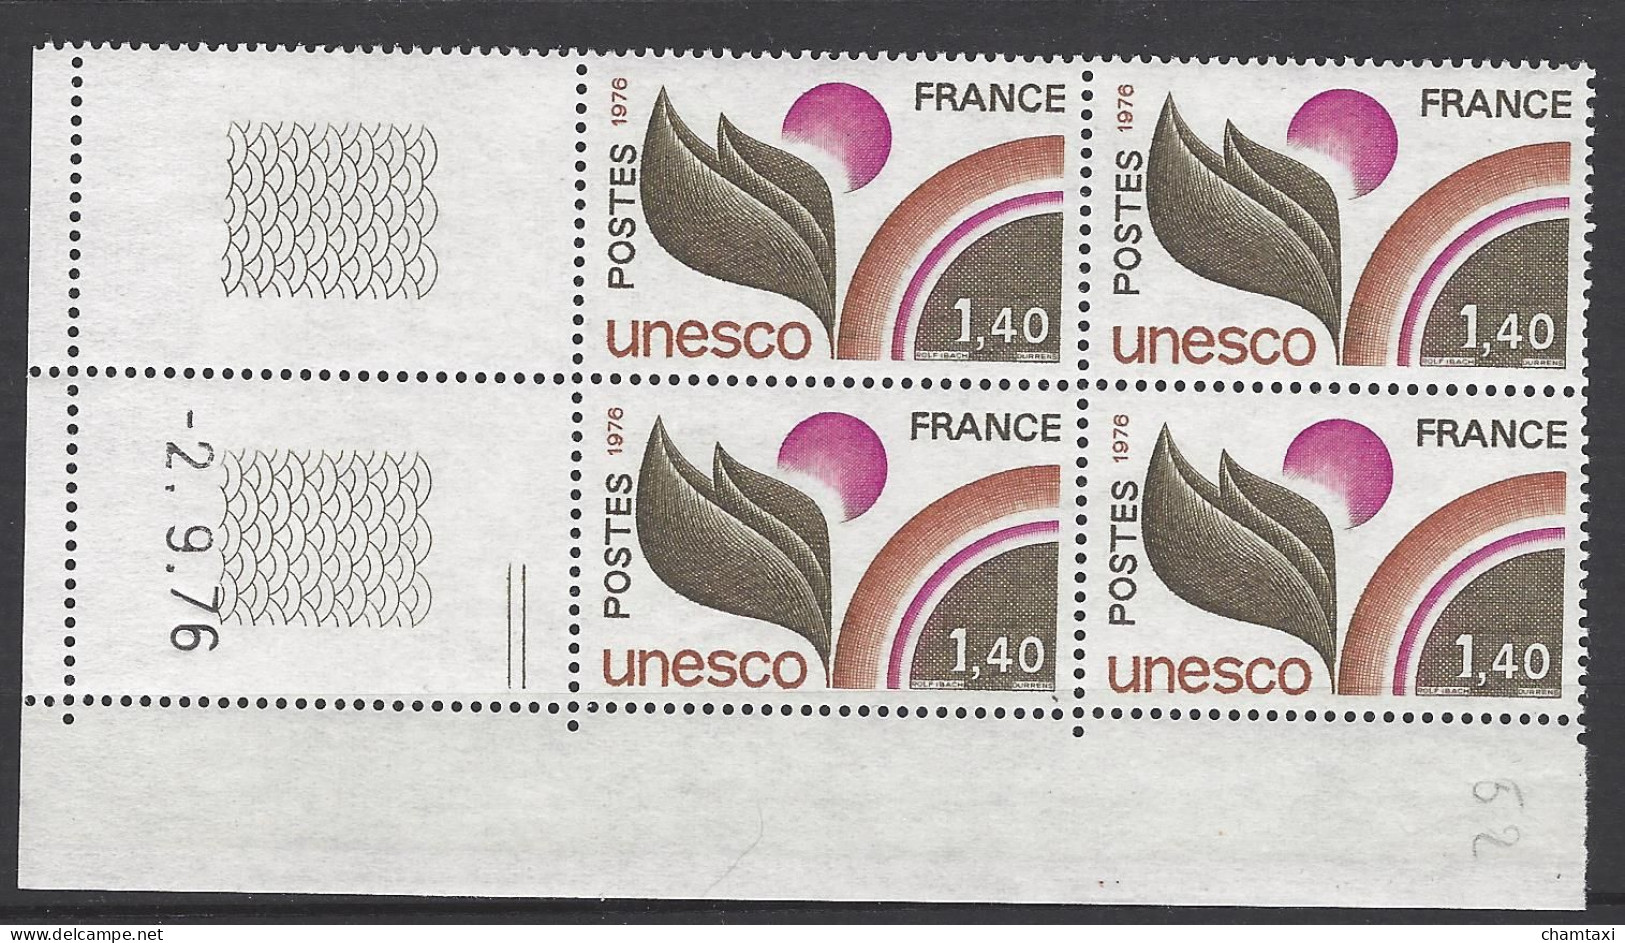 CD 52 FRANCE 1976 TIMBRE SERVICE UNESCO COIN DATE 52 : 2 / 9 / 76 - Dienstmarken